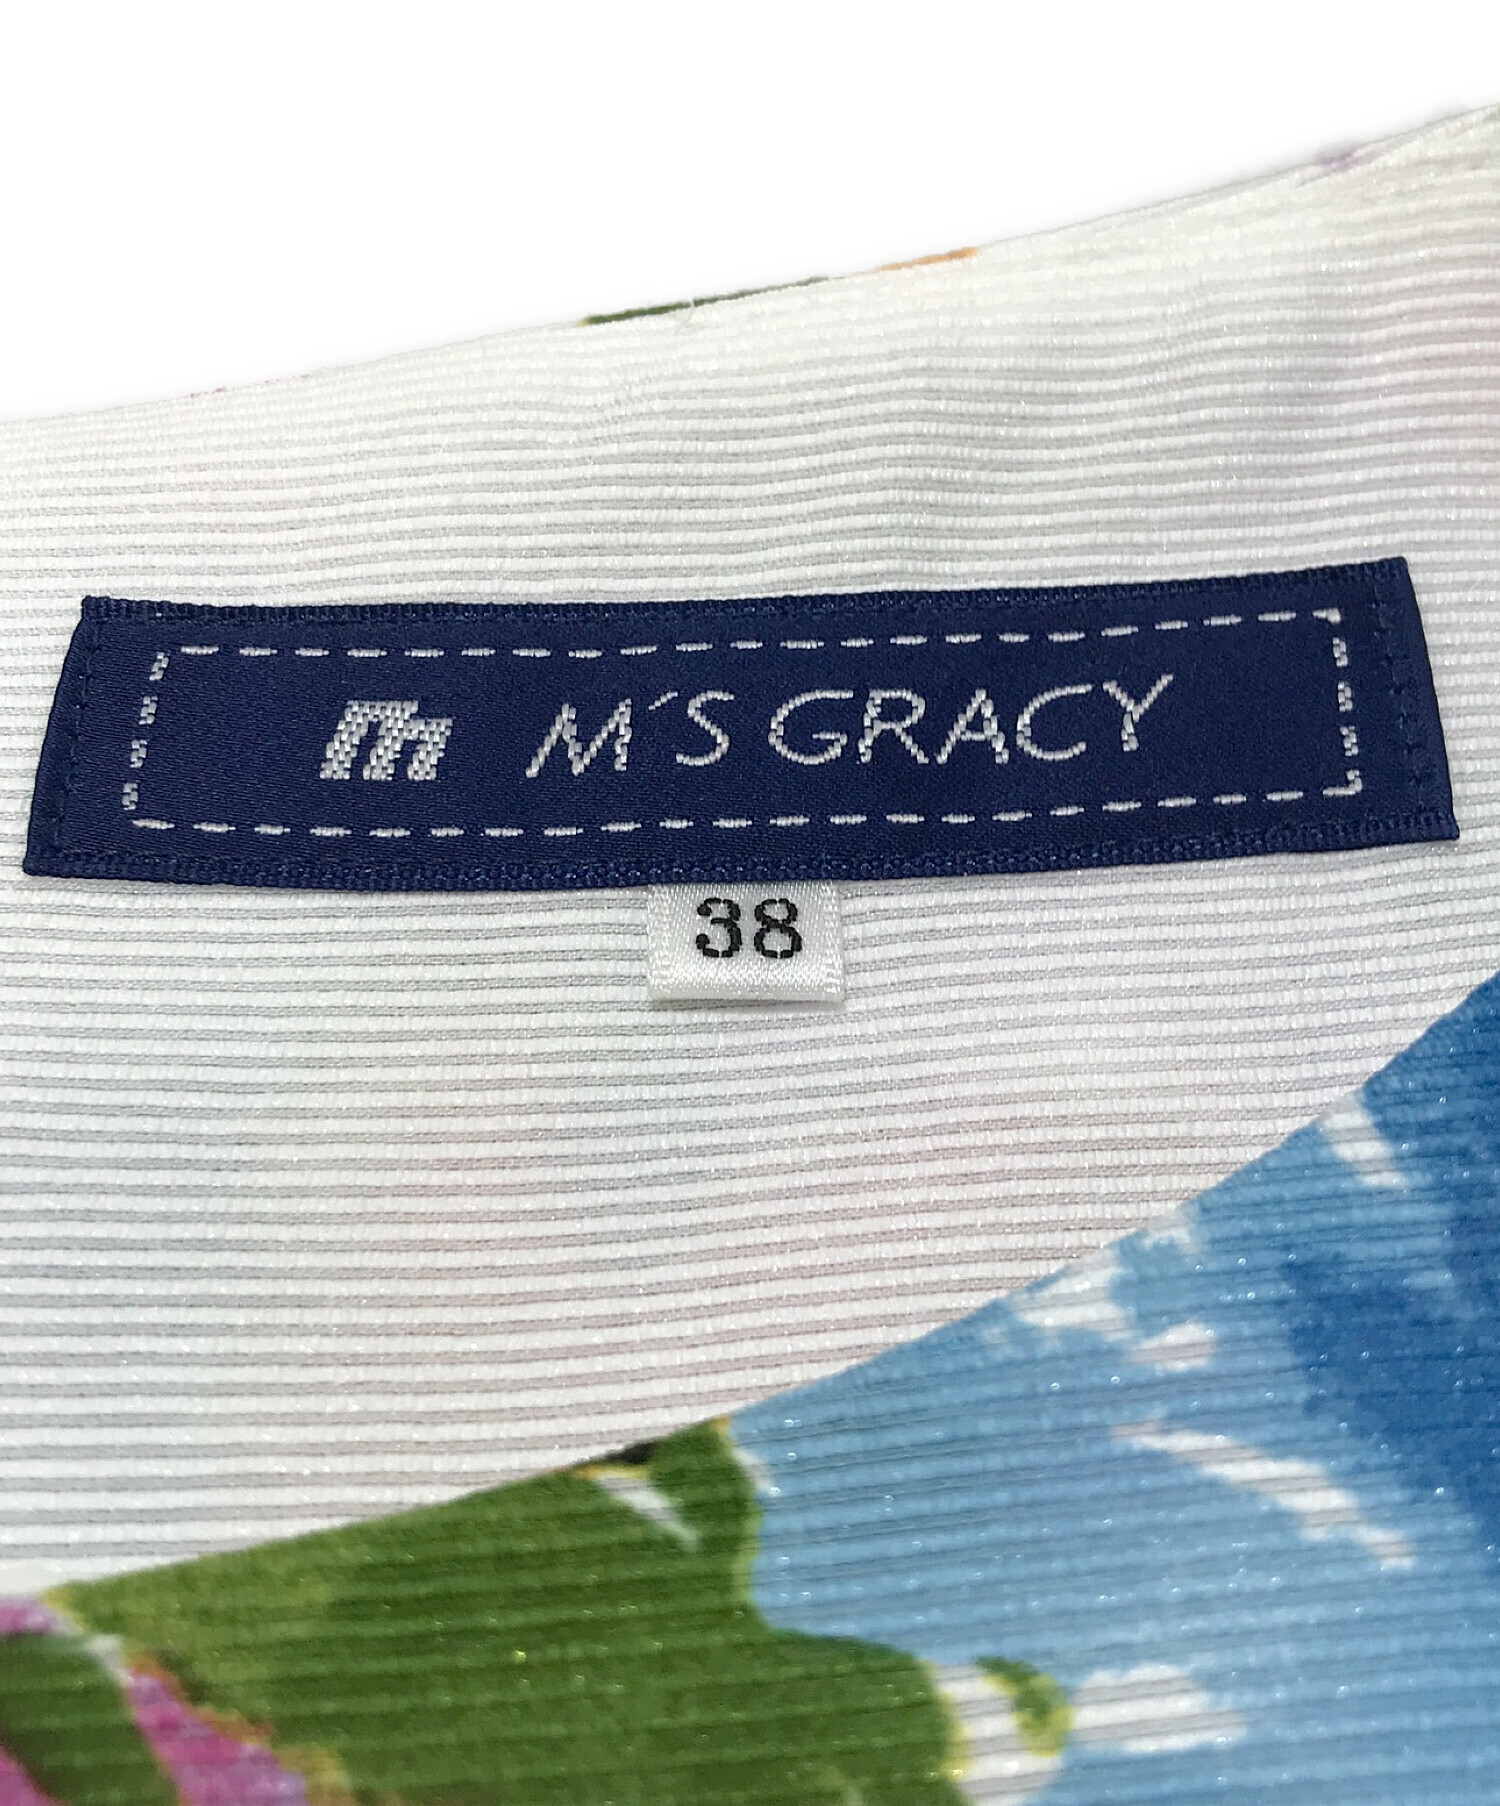 M'S GRACY (エムズグレイシー) 花柄ワンピース ホワイト サイズ:38 未使用品